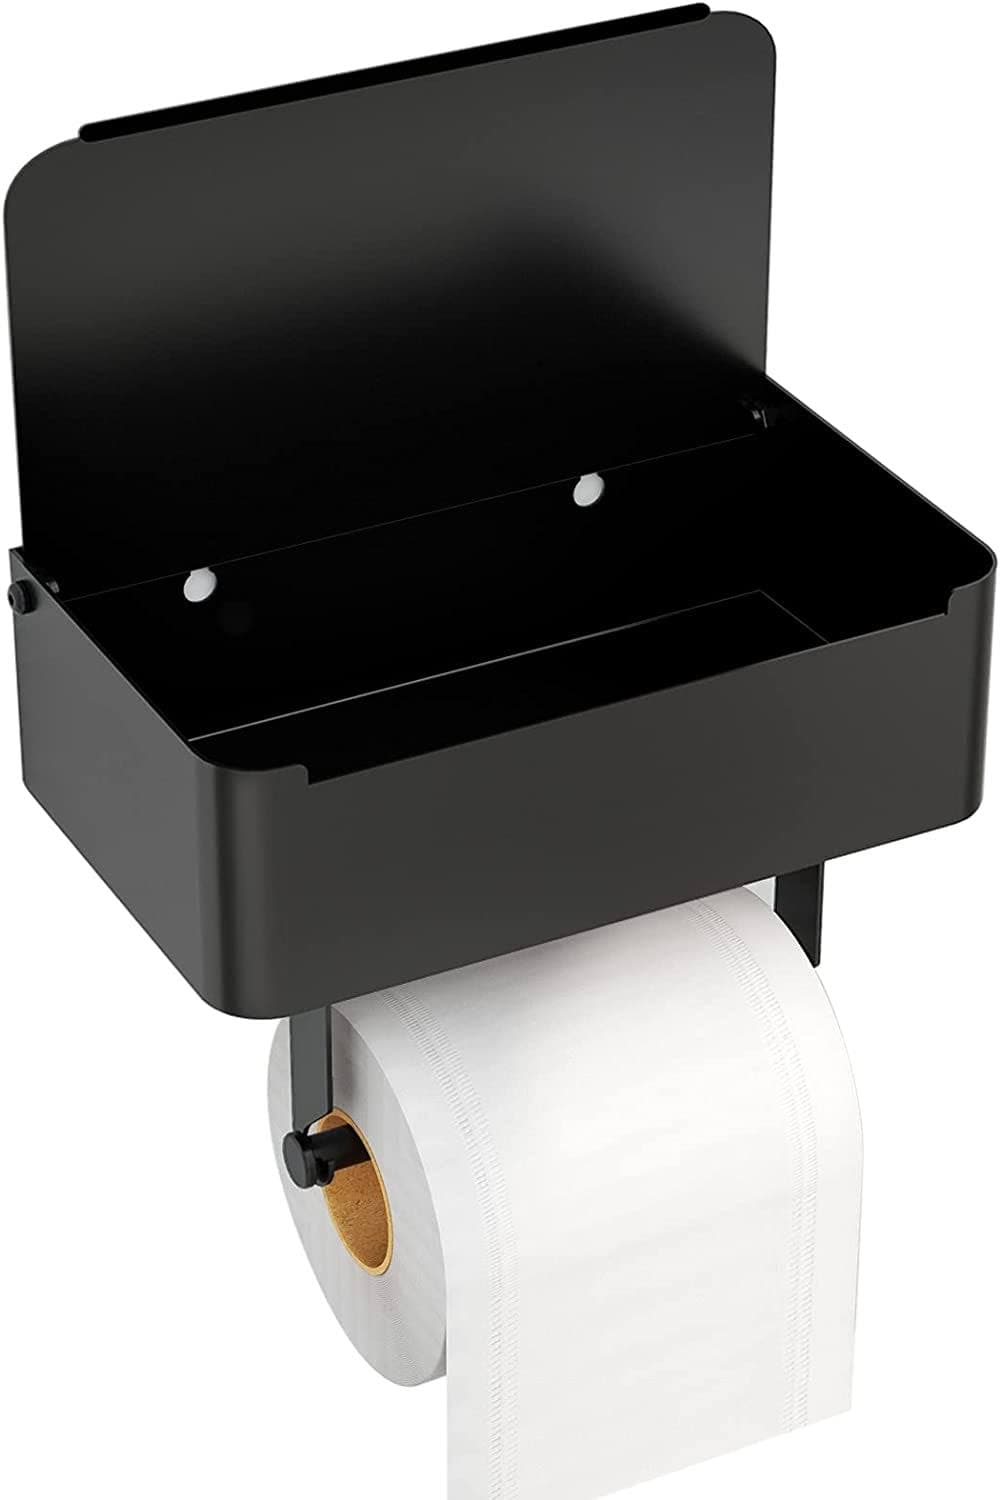 mengen selecteer Onze onderneming Toiletrolhouder Zwart met Plankje en Bakje – EAVY.NL